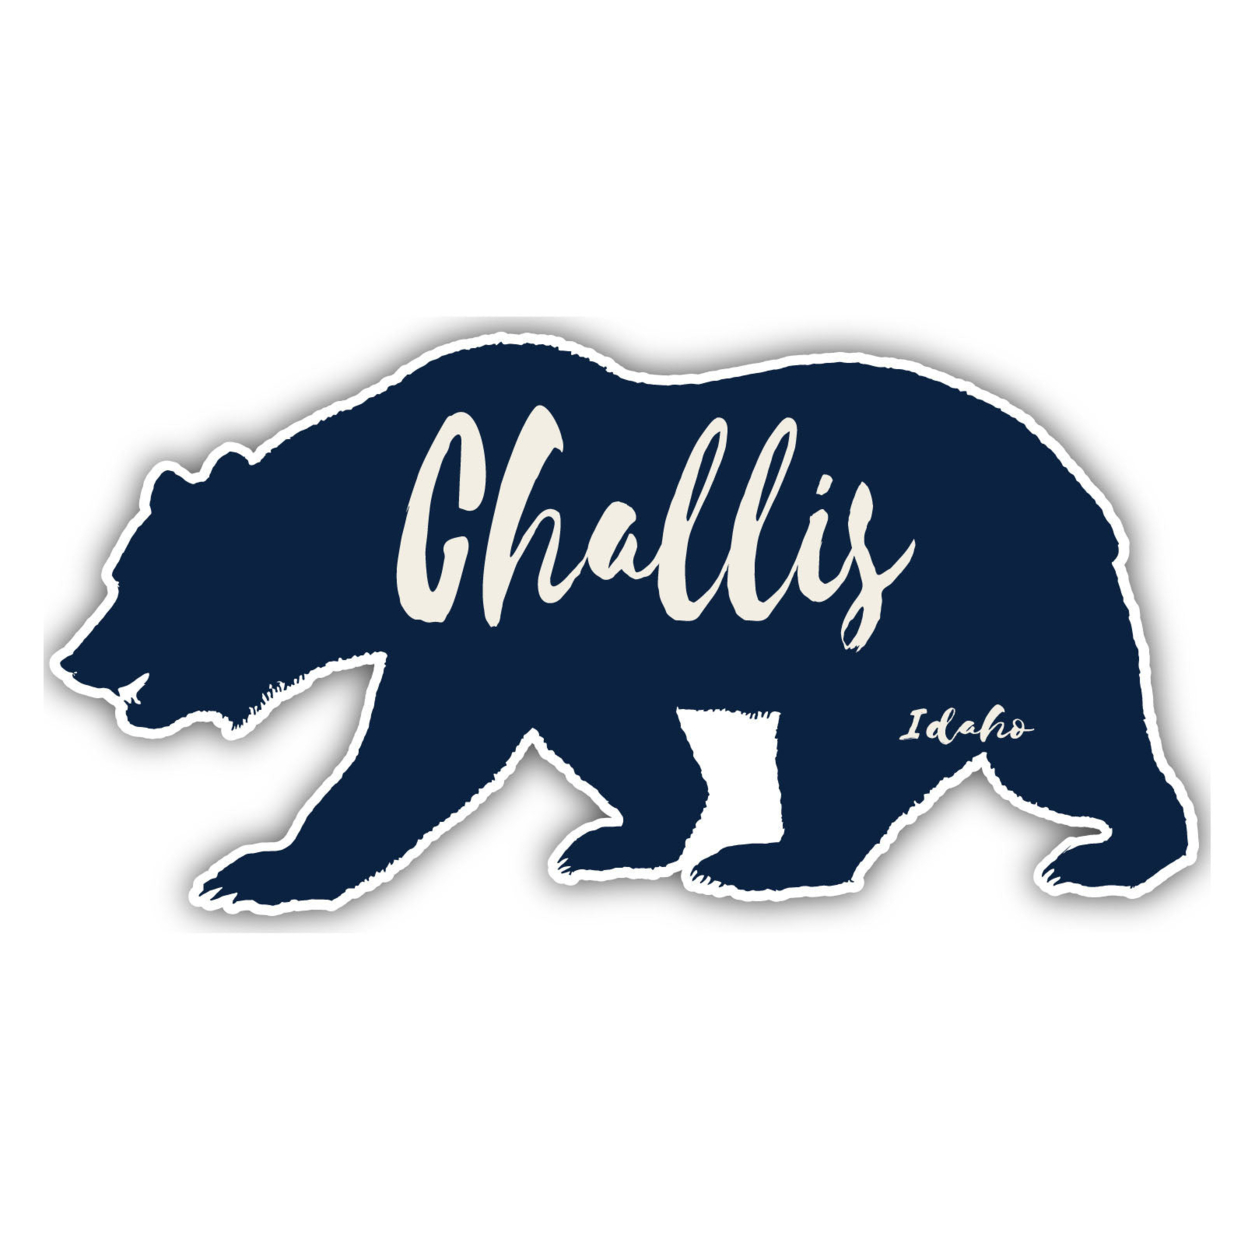 Challis Idaho Souvenir Decorative Stickers (Choose Theme And Size) - Single Unit, 12-Inch, Adventures Awaits